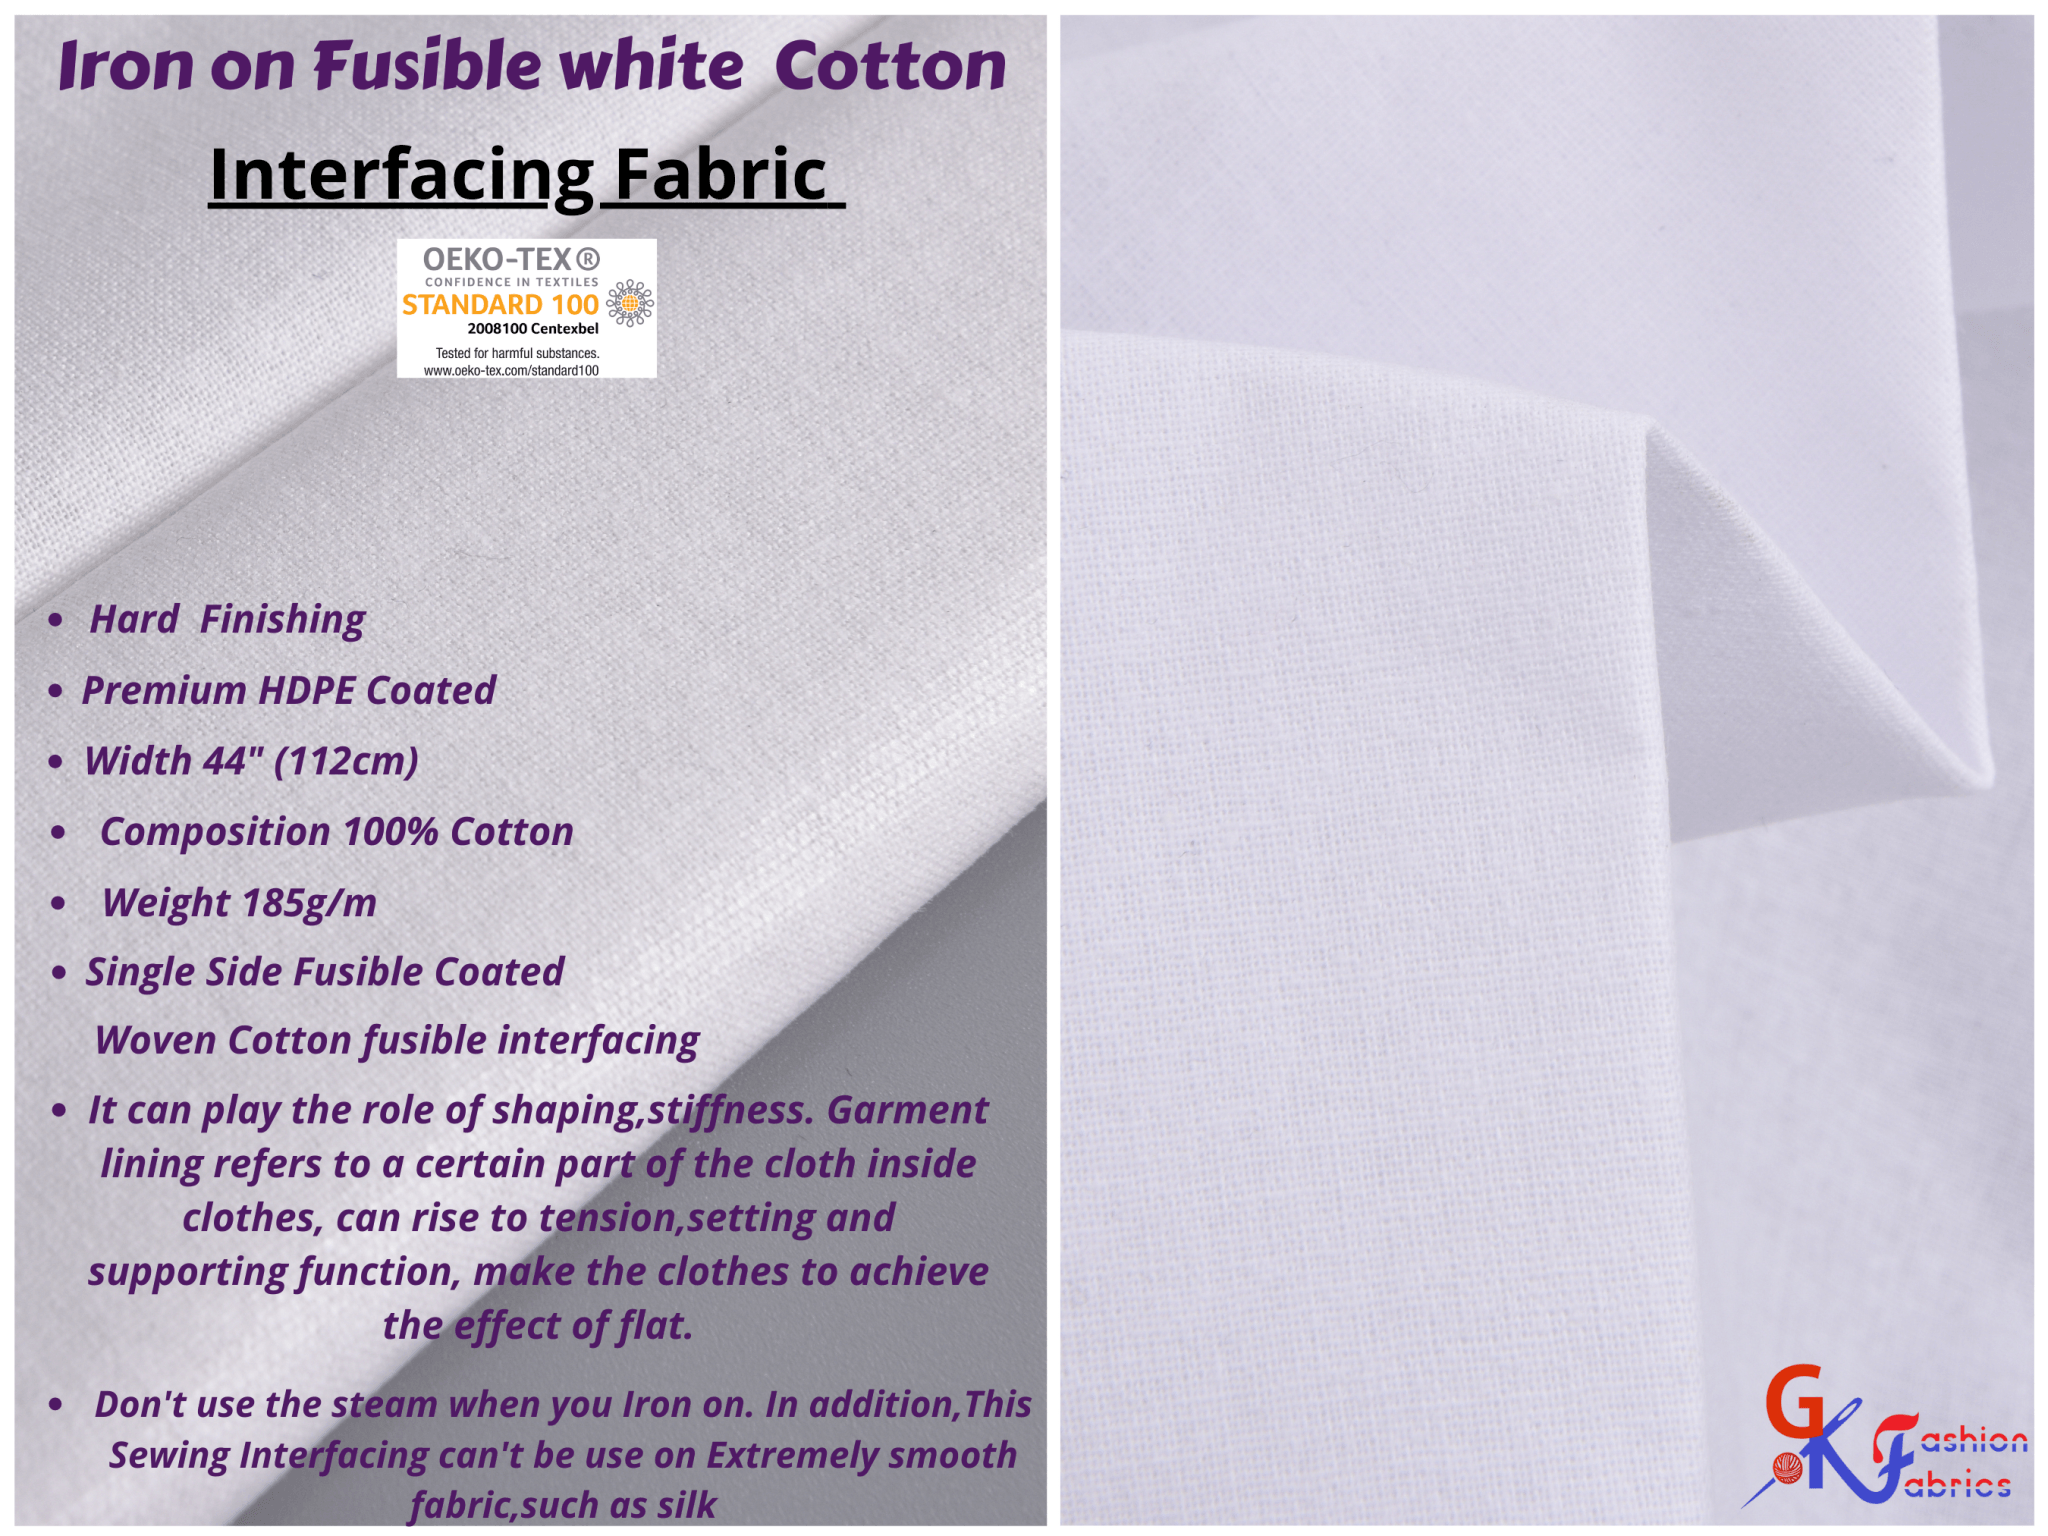 Iron on Fusible Single side White Cotton Interfacing fabric. Hard